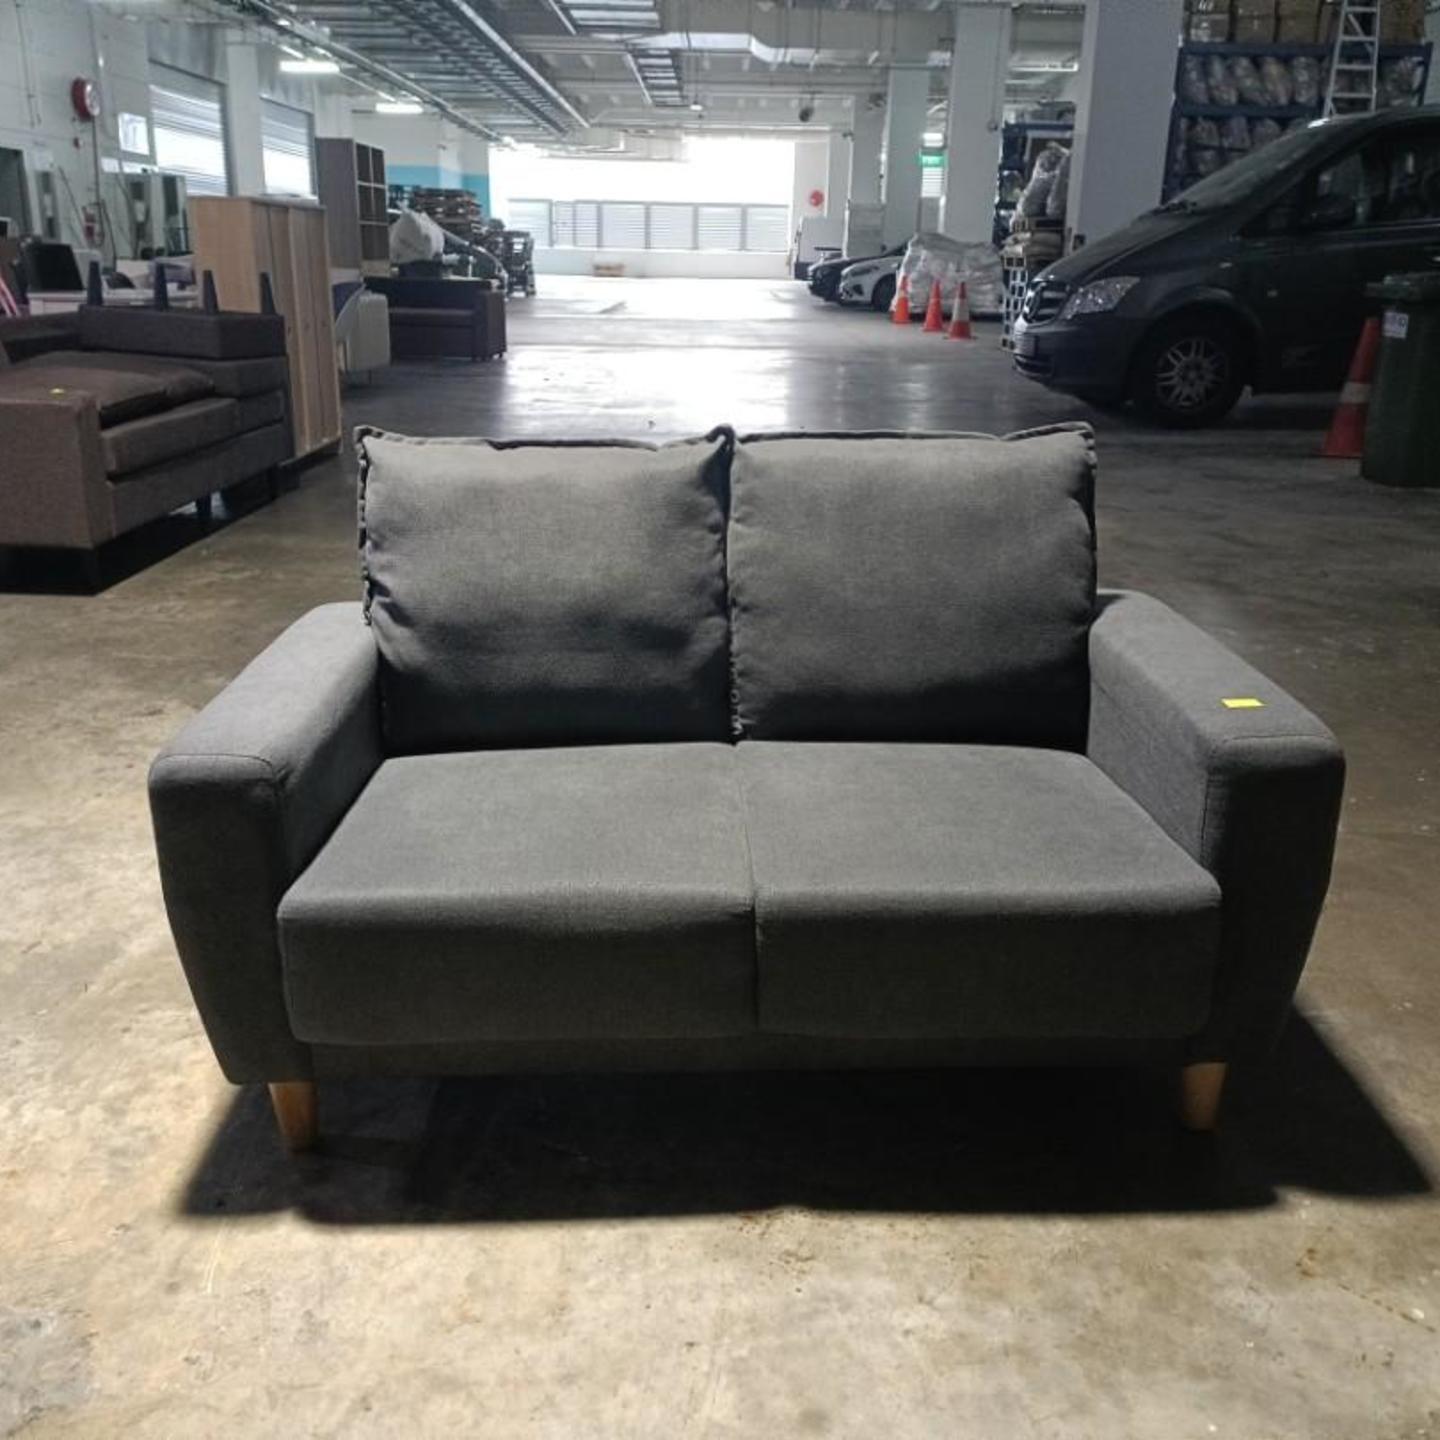 HAEGA 2 Seater Sofa in GREY Fabric